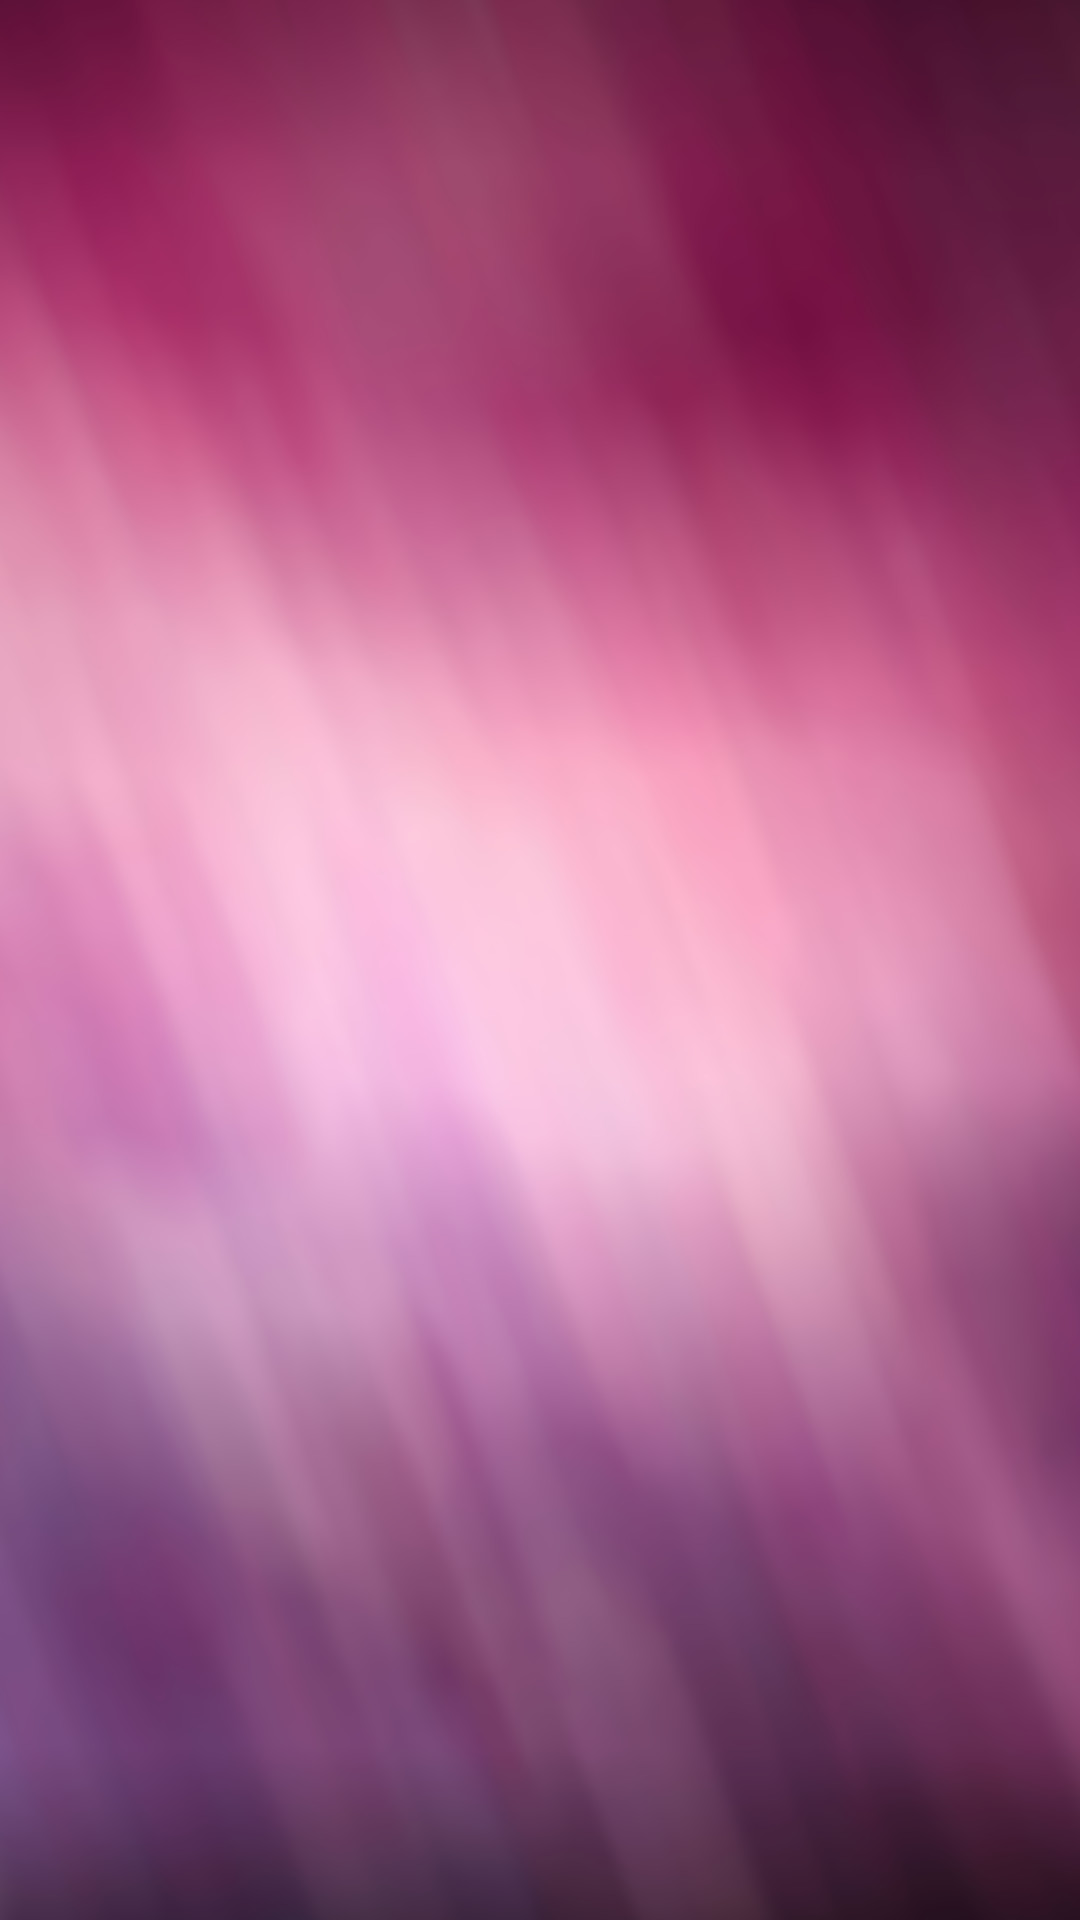 1080x1920 Dreamy Purple 1080 x 1920 FHD Wallpaper Dreamy Purple 1080 x 1920 FHD  Wallpaper